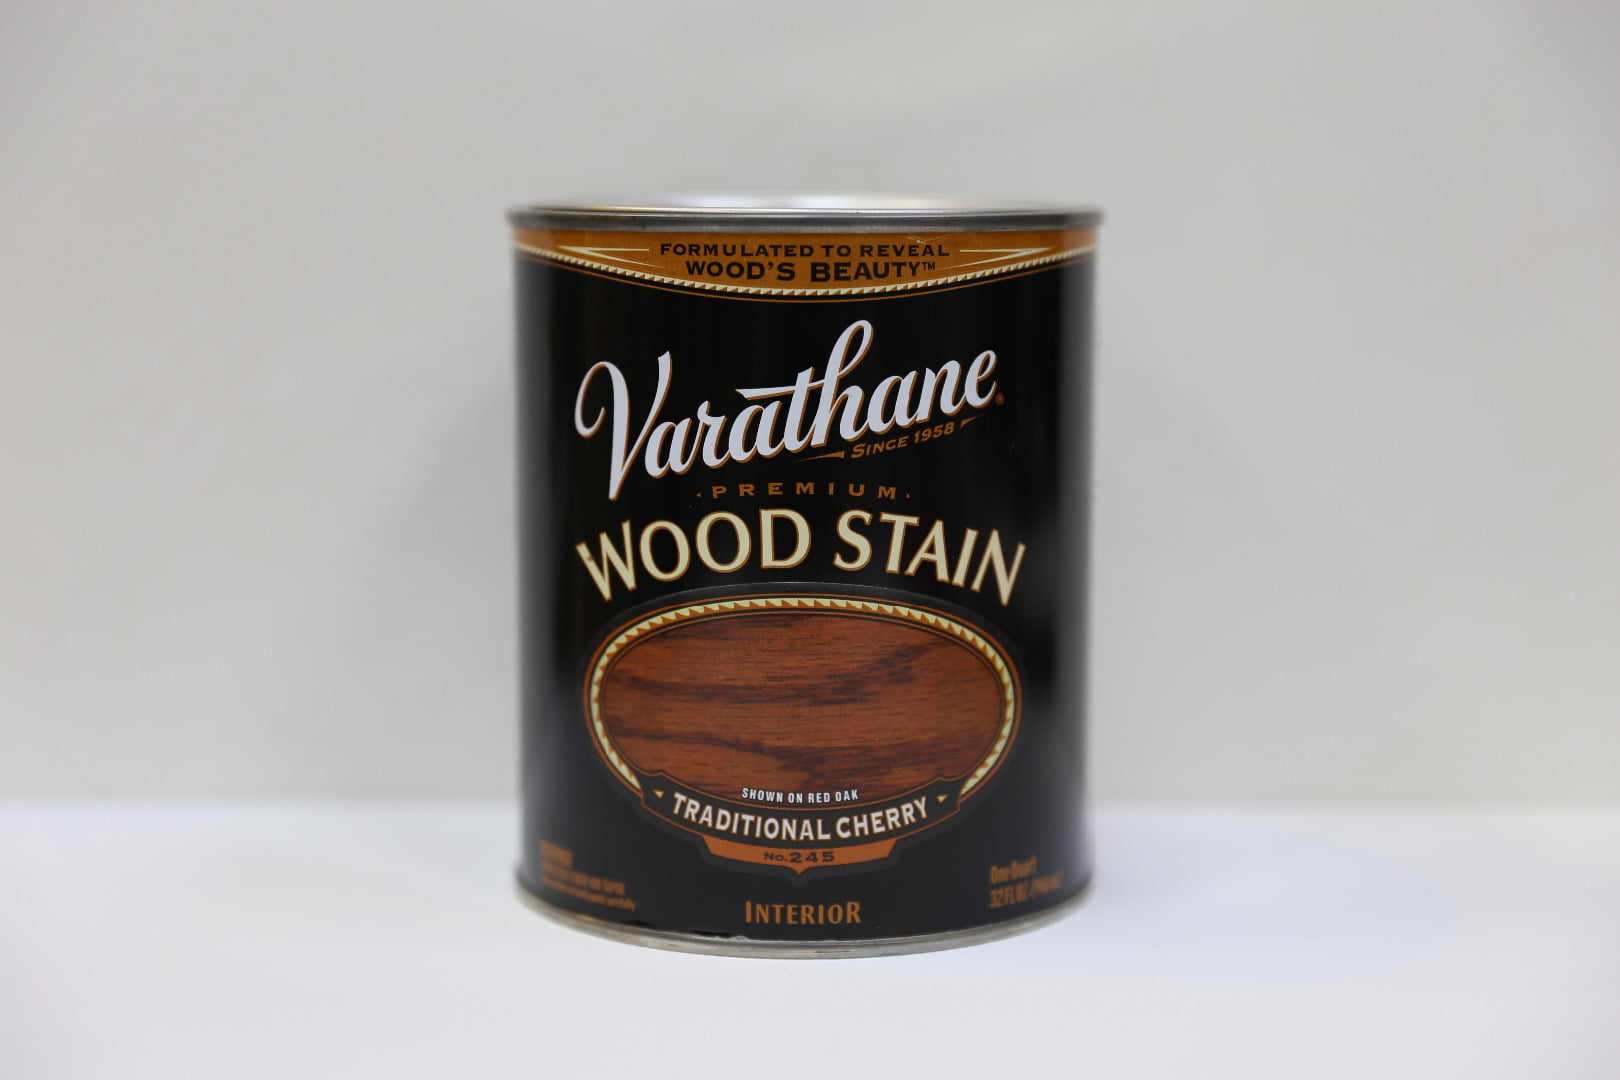 Пропитка для дерева Wood Staine golden pecan